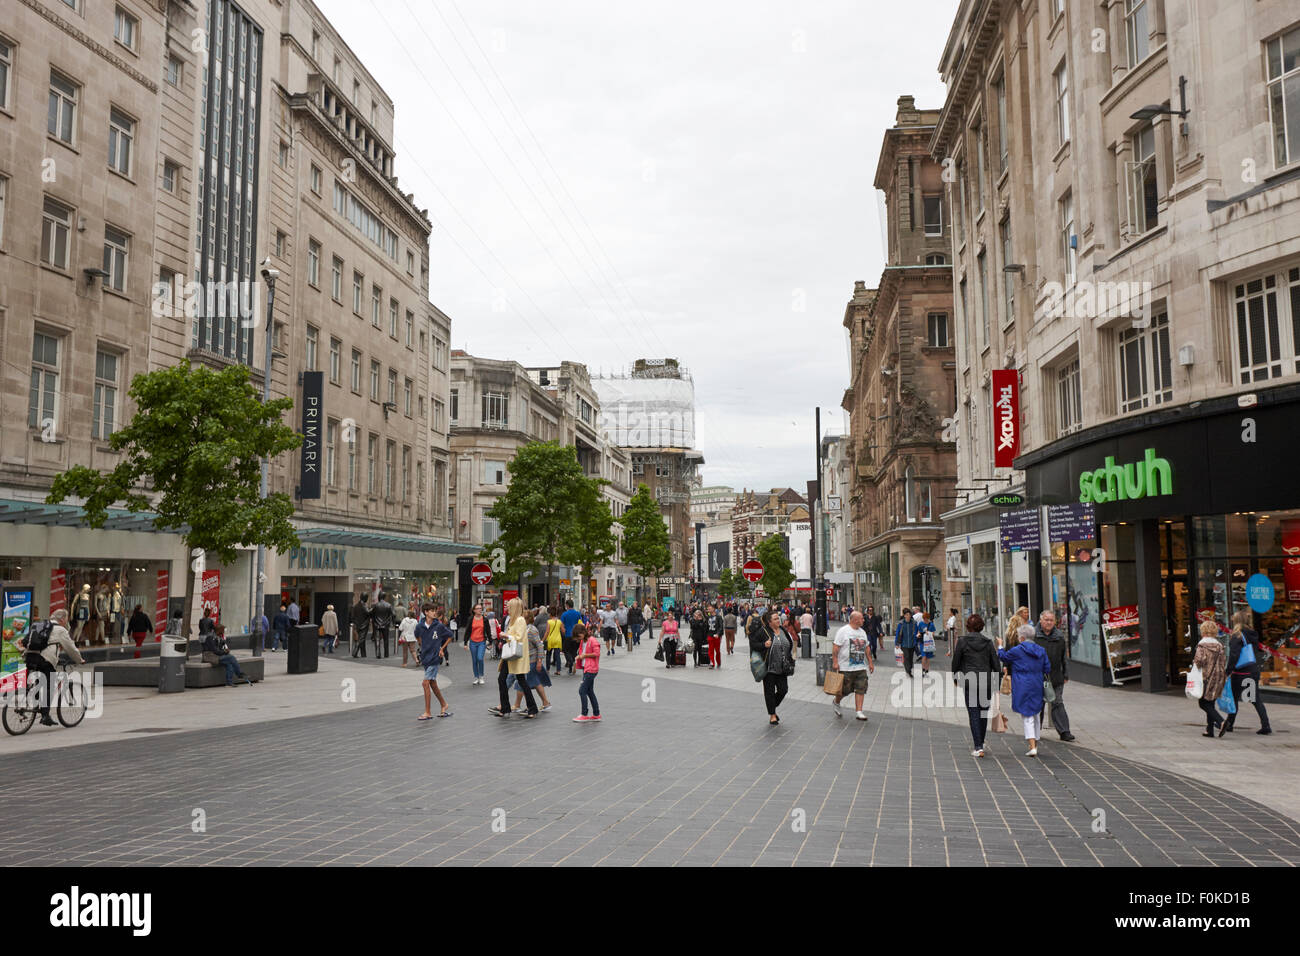 Church Street zona peatonal del centro de la ciudad de Liverpool, Inglaterra Foto de stock